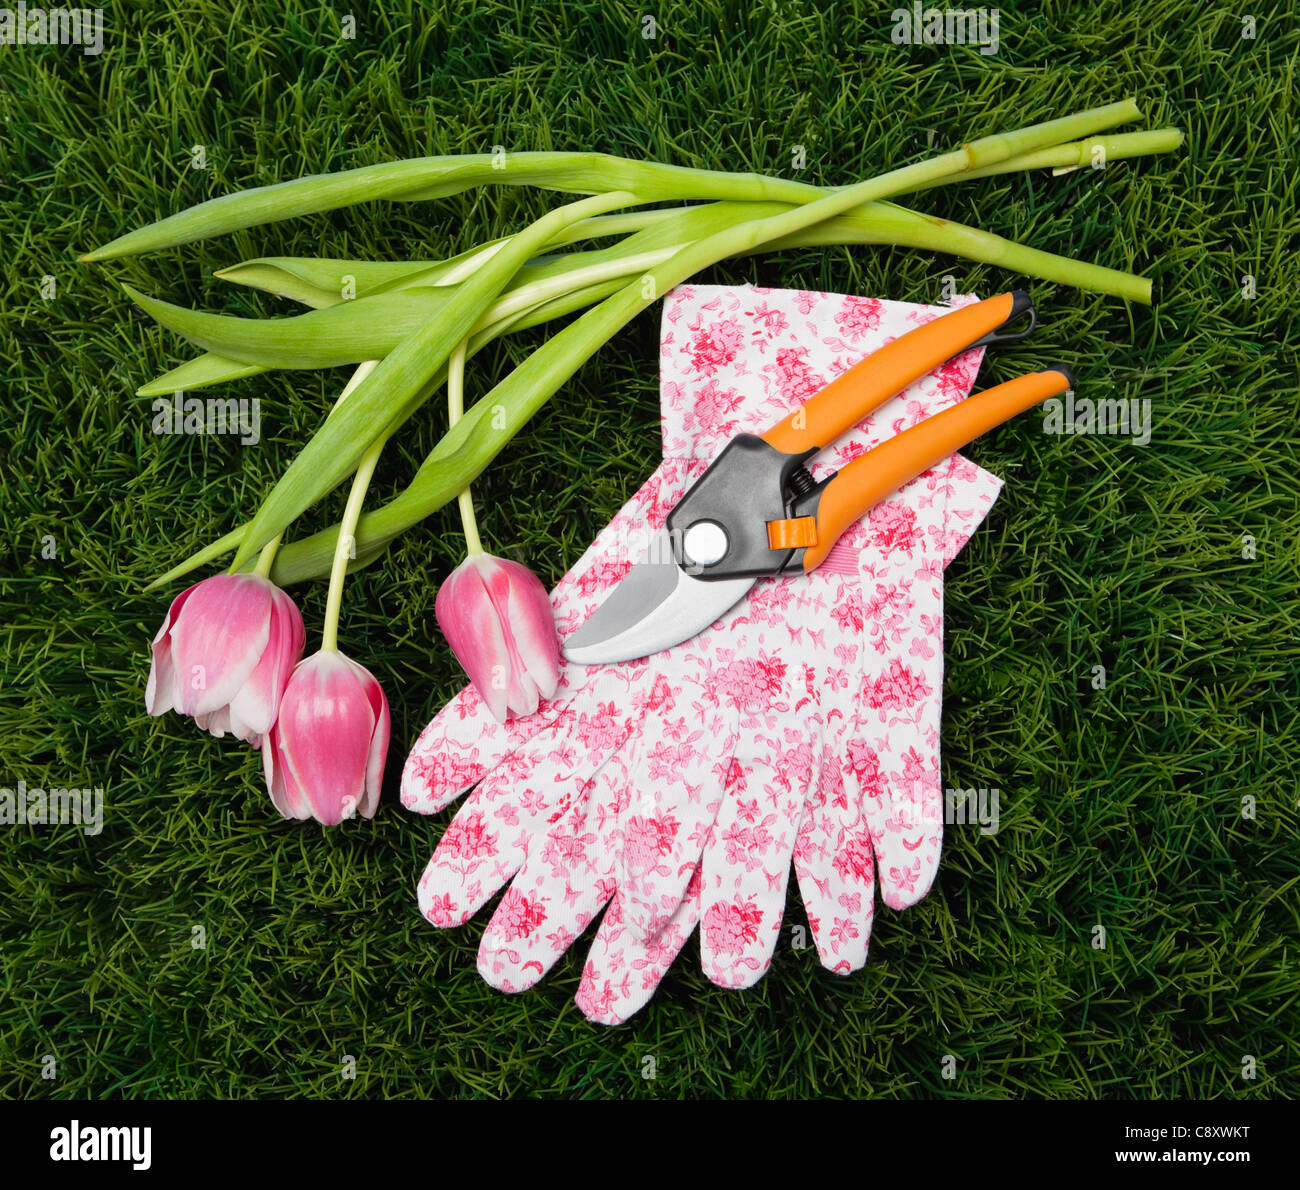 USA, Illinois, Metamora, Shears, gardening gloves and tulips on lawn Stock Photo